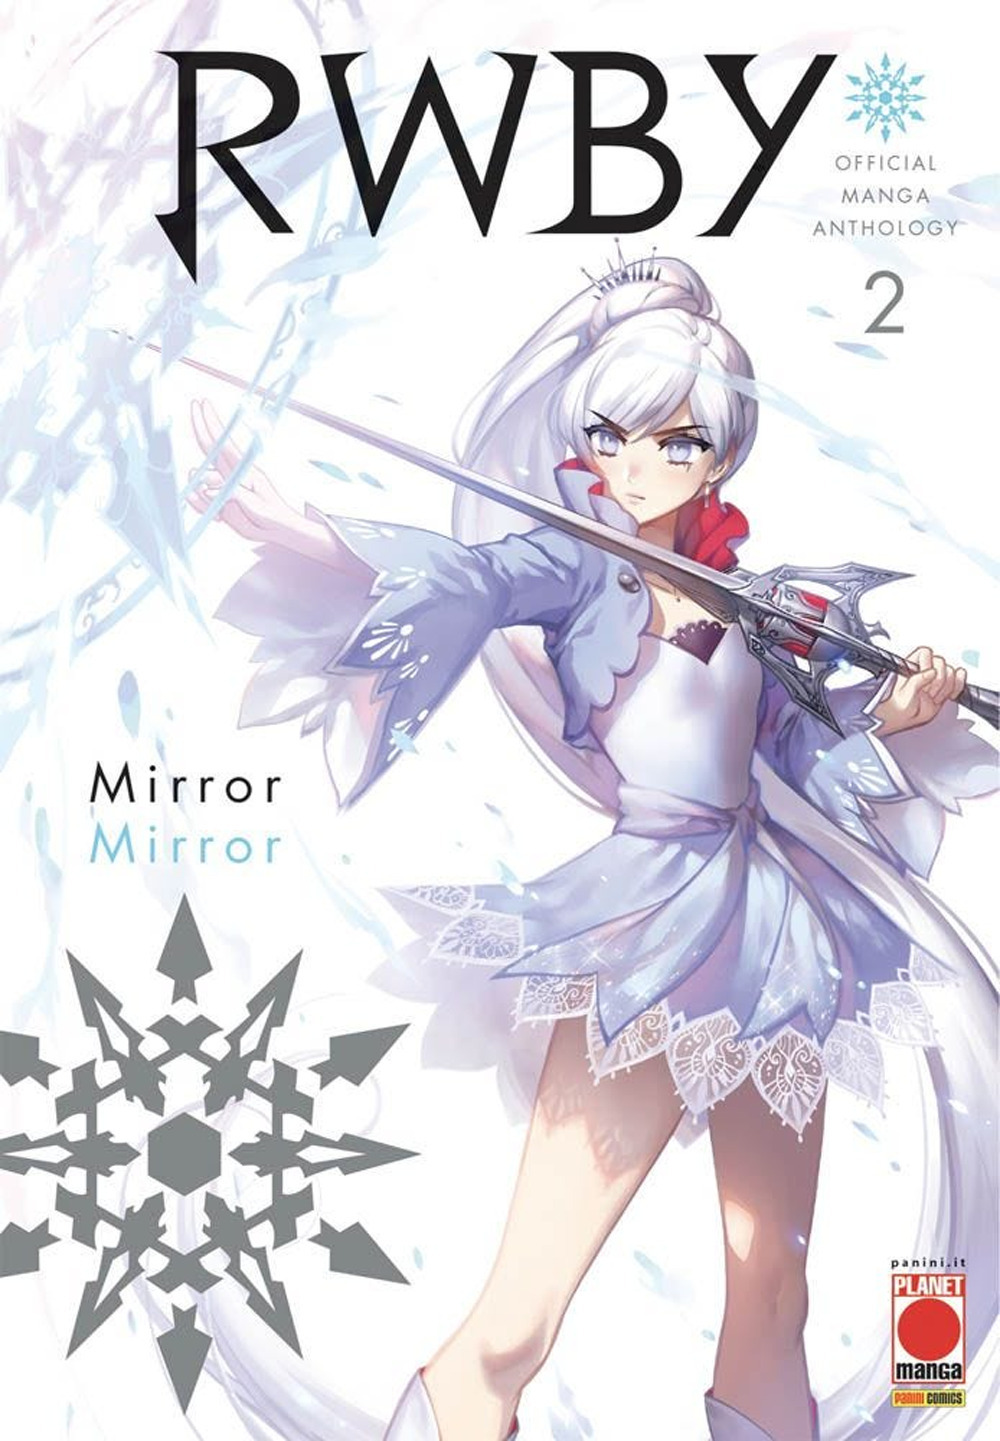 RWBY. Official manga anthology. Vol. 2: Mirror mirror